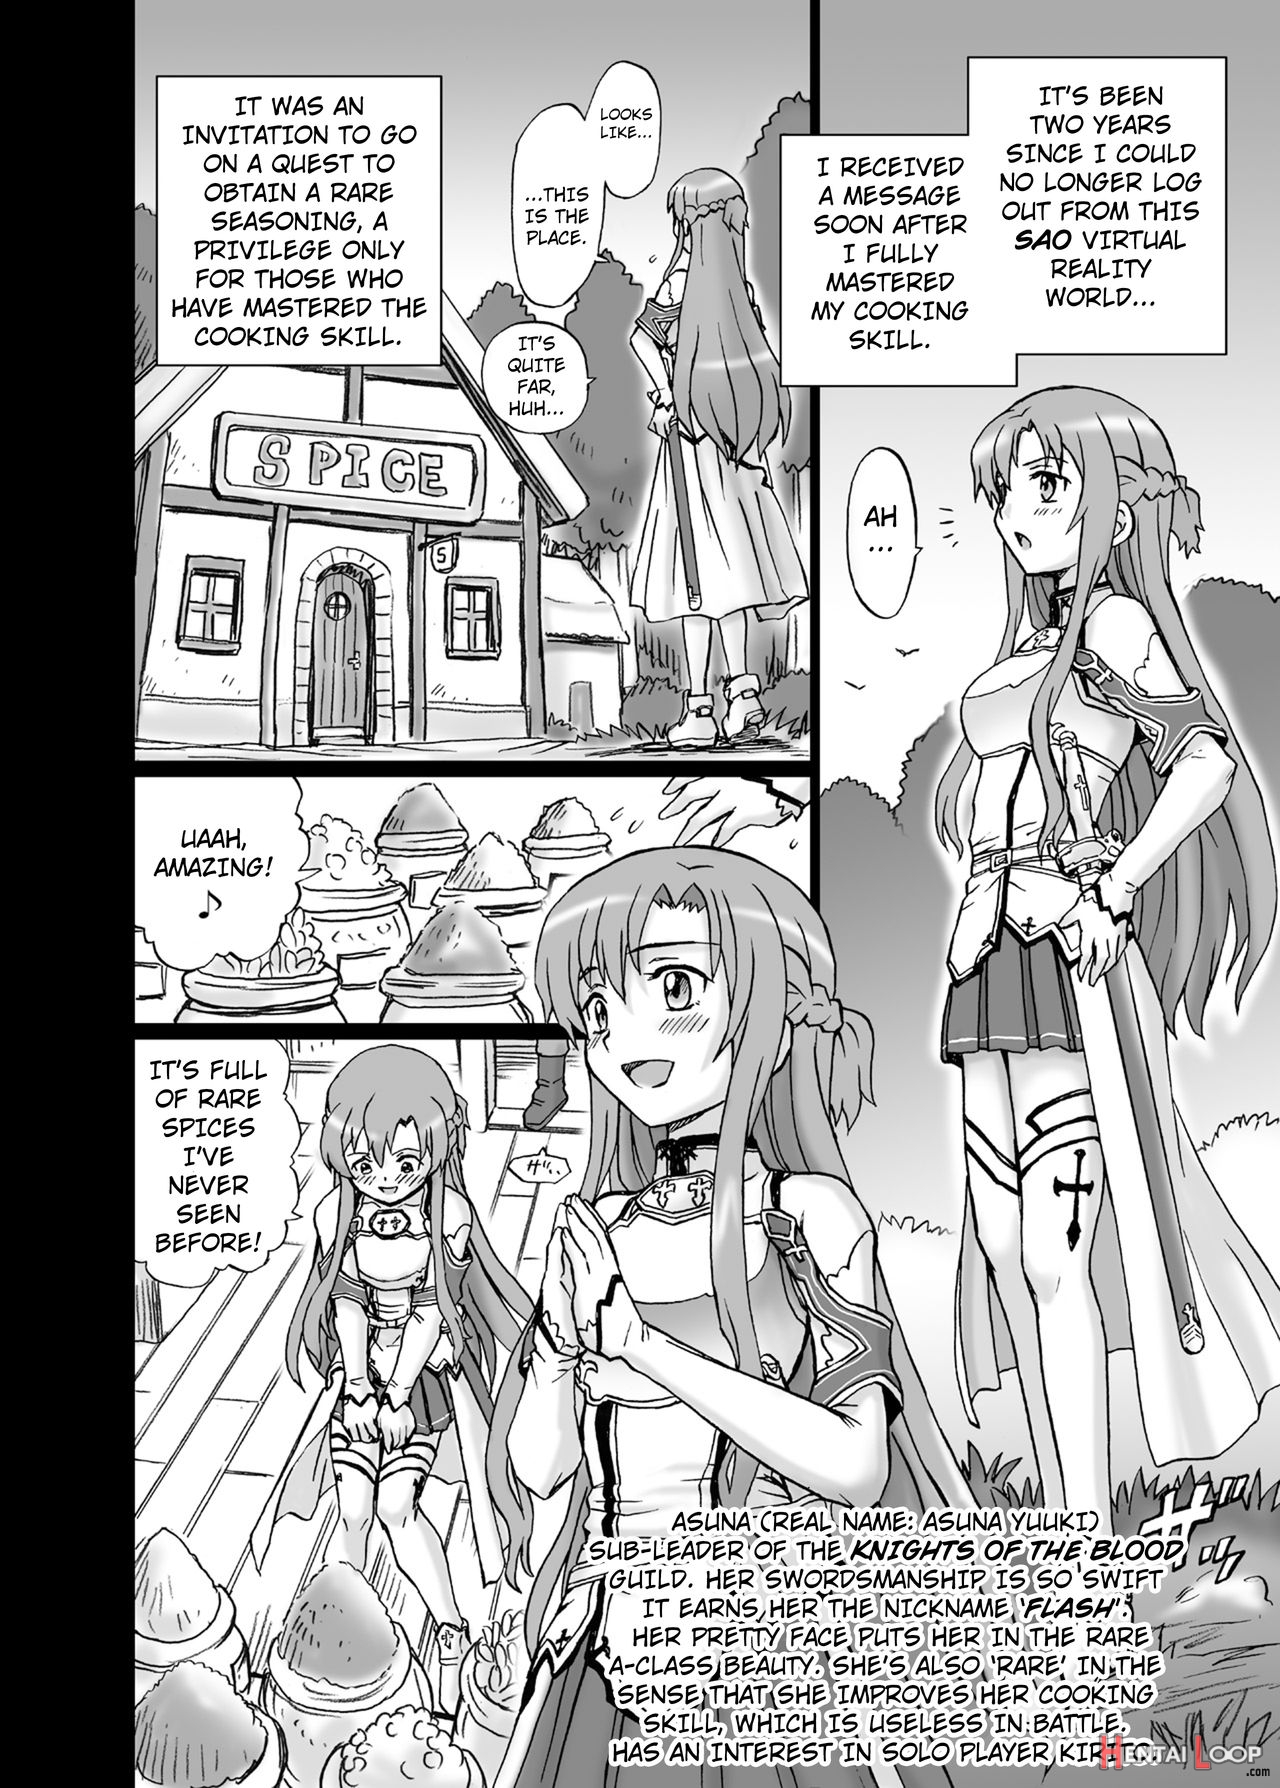 Tail-man Asuna Book page 3